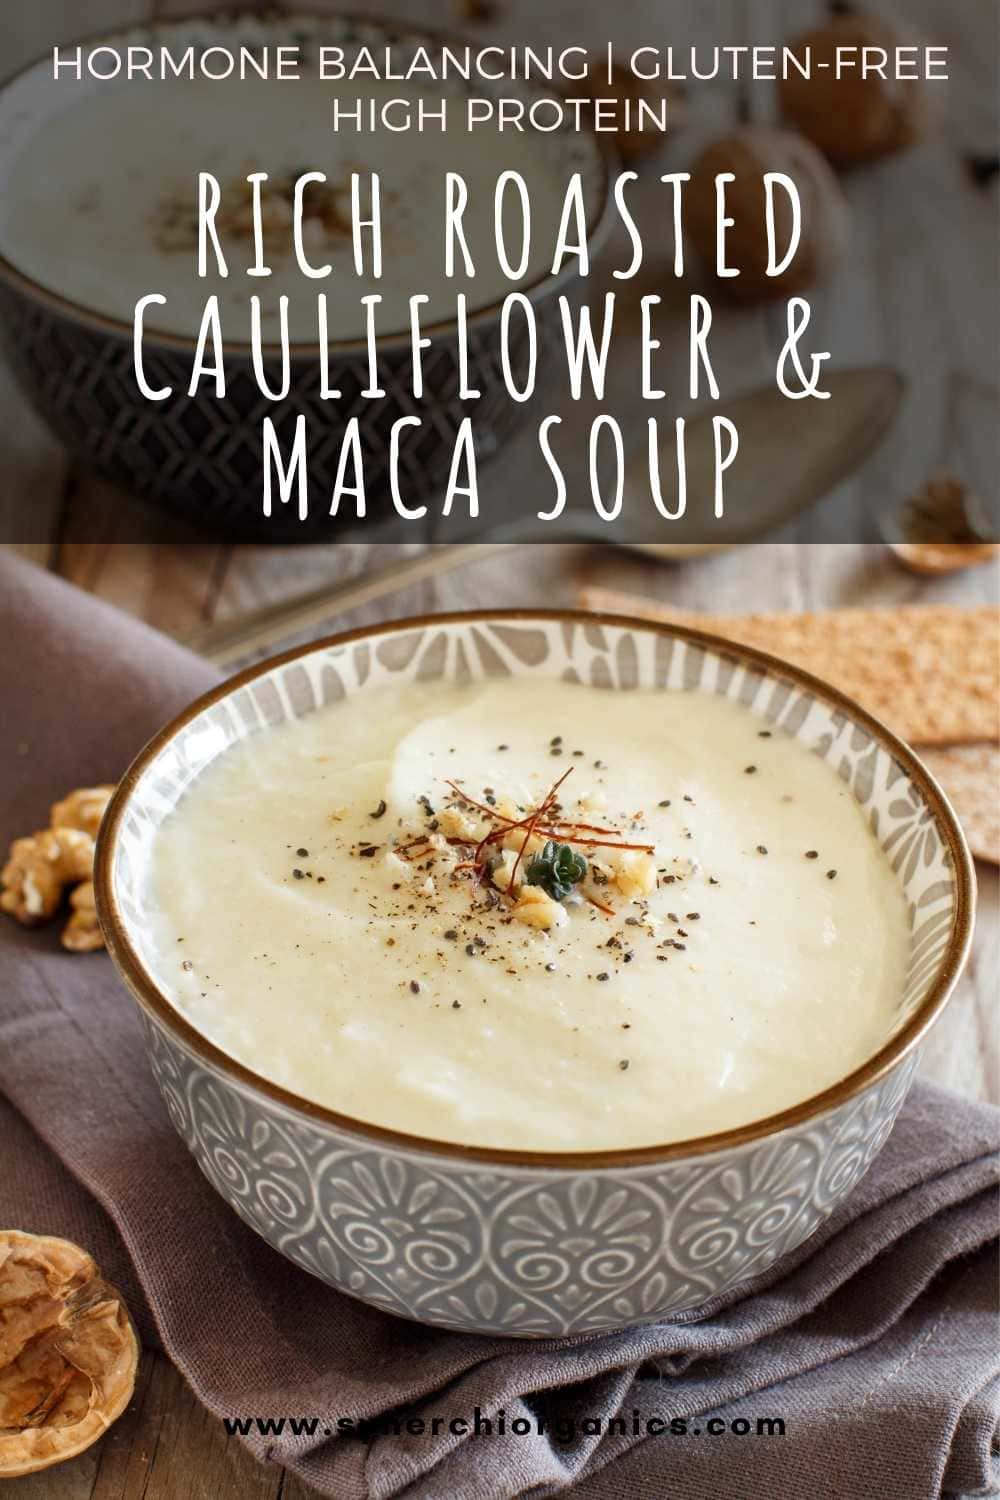 roasted cauliflower soup